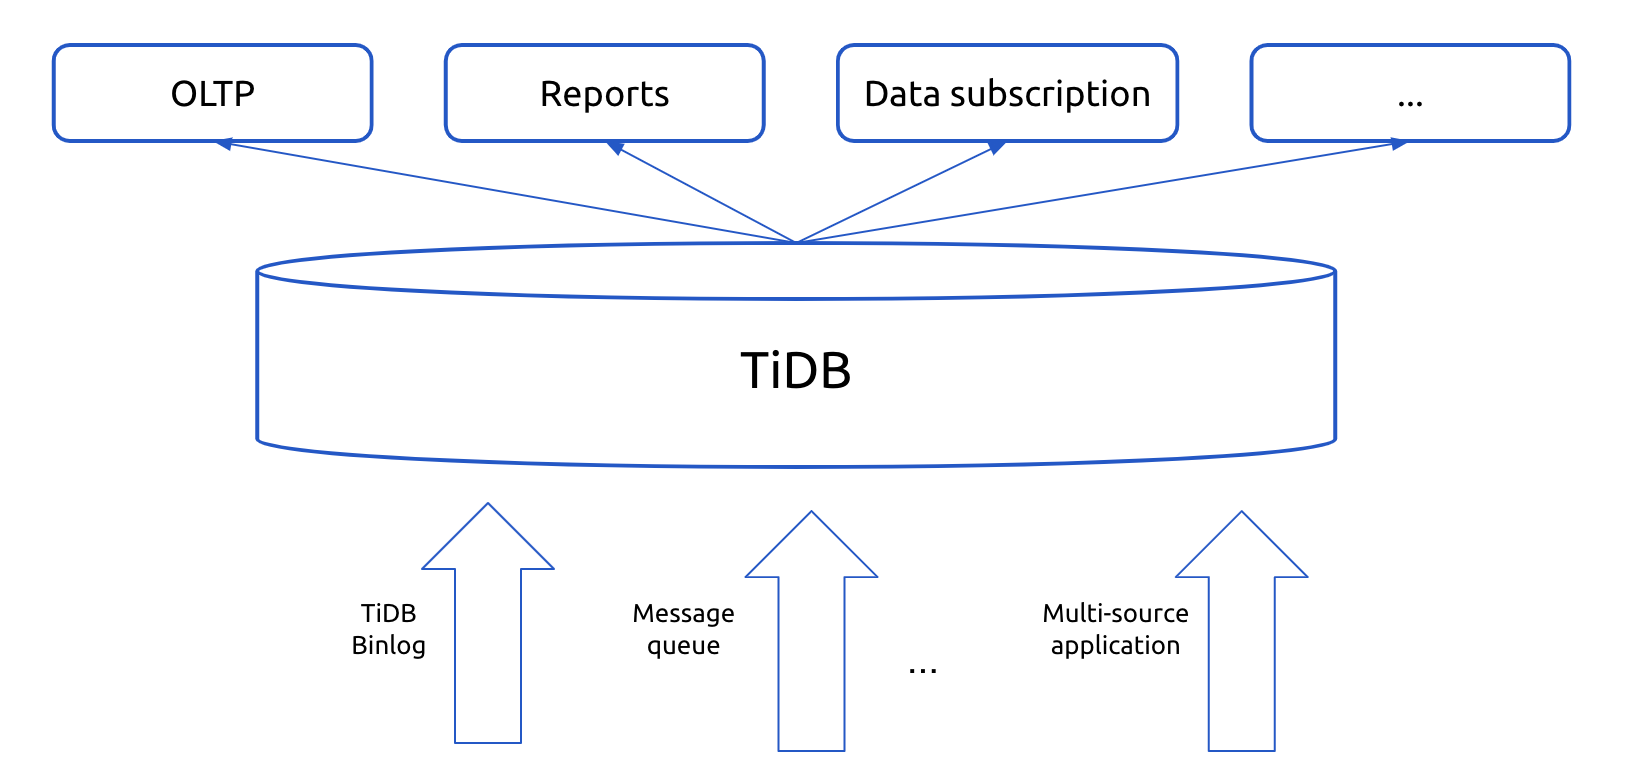 TiDB for the data hub